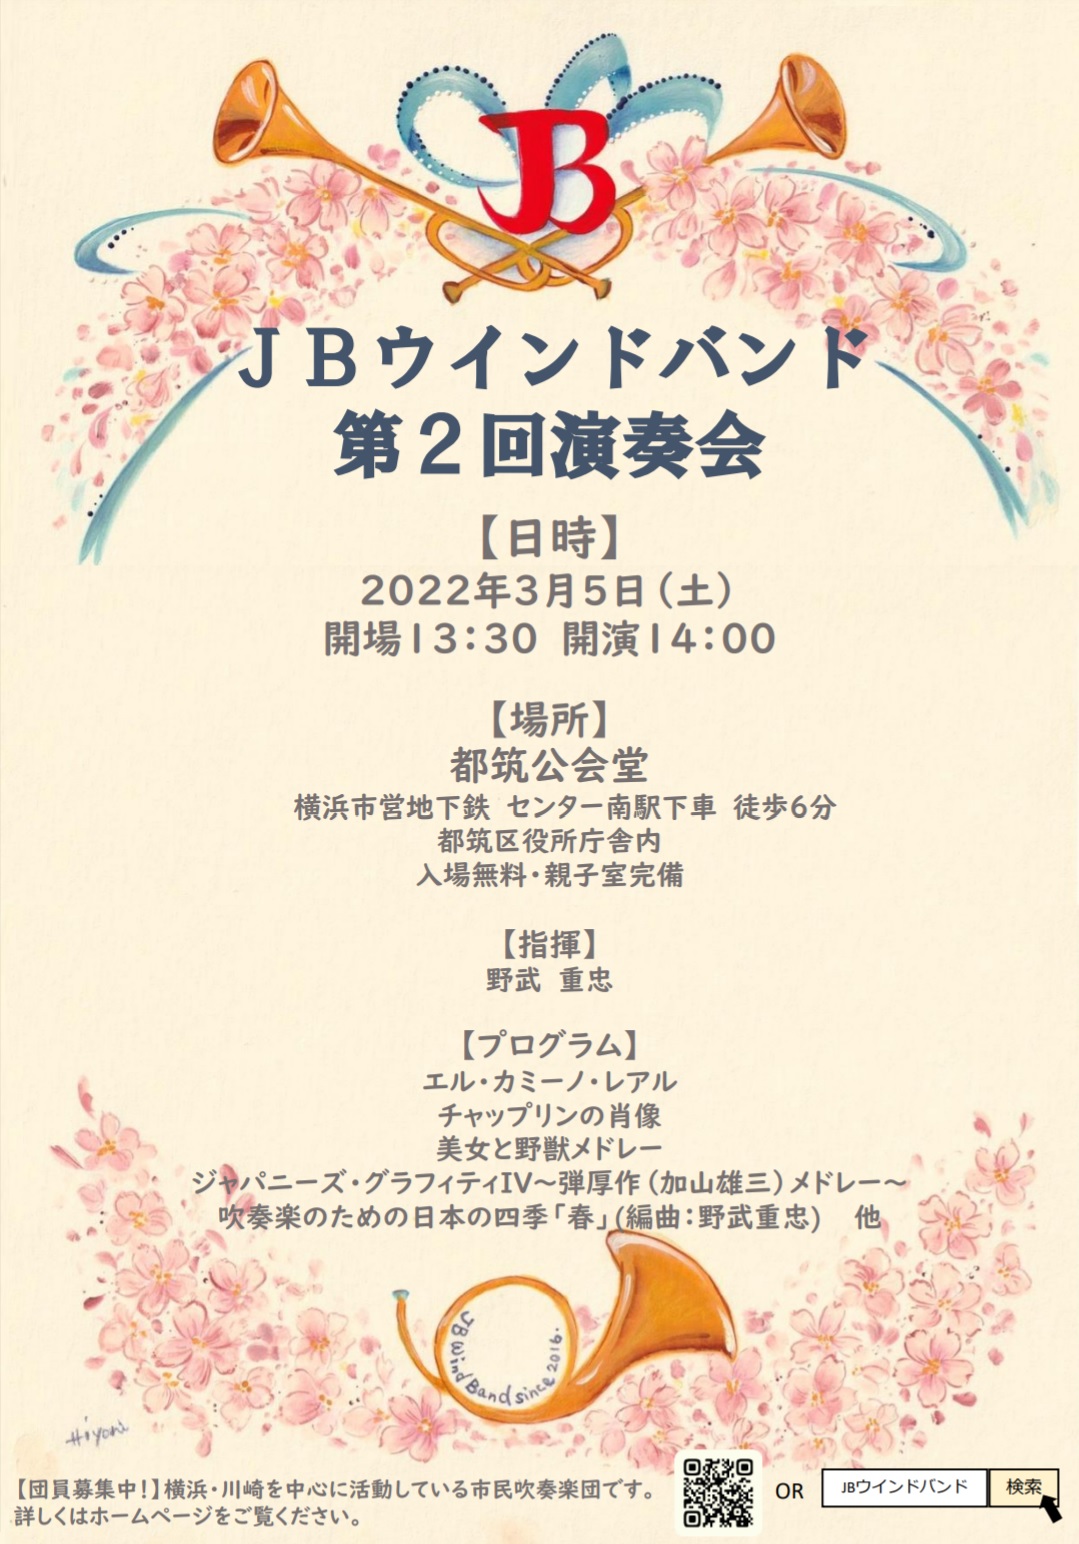 Jbウインドバンド 横浜の吹奏楽団 22年3月5日演奏会 Jbwind Twitter